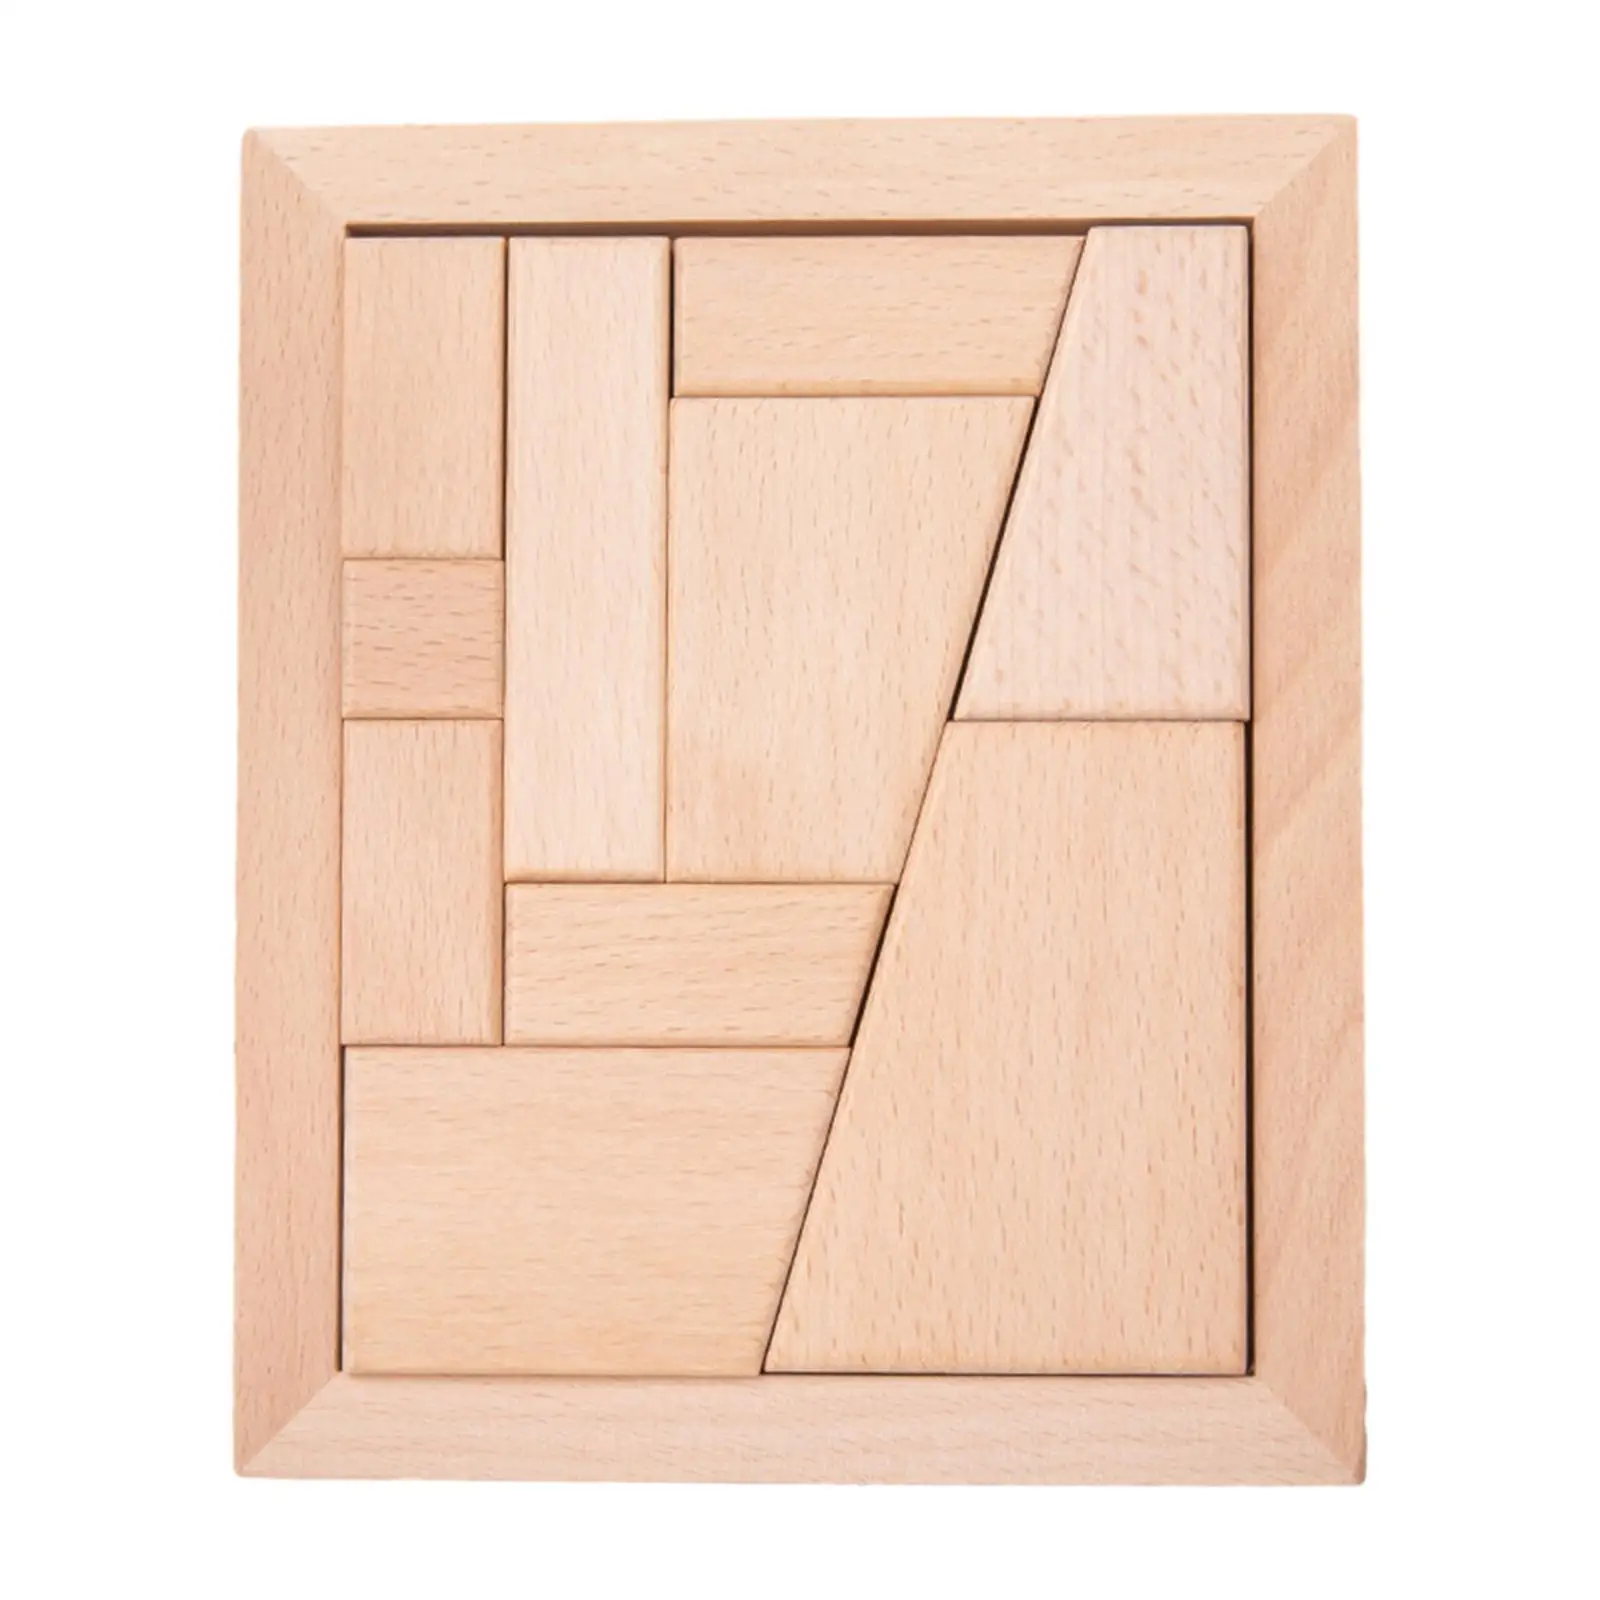 Tangram Wooden Puzzle Teaching Aids Adults Puzzles Games Geometric Shape Jigsaw Puzzle for Children Boys Preschool Girls Kids